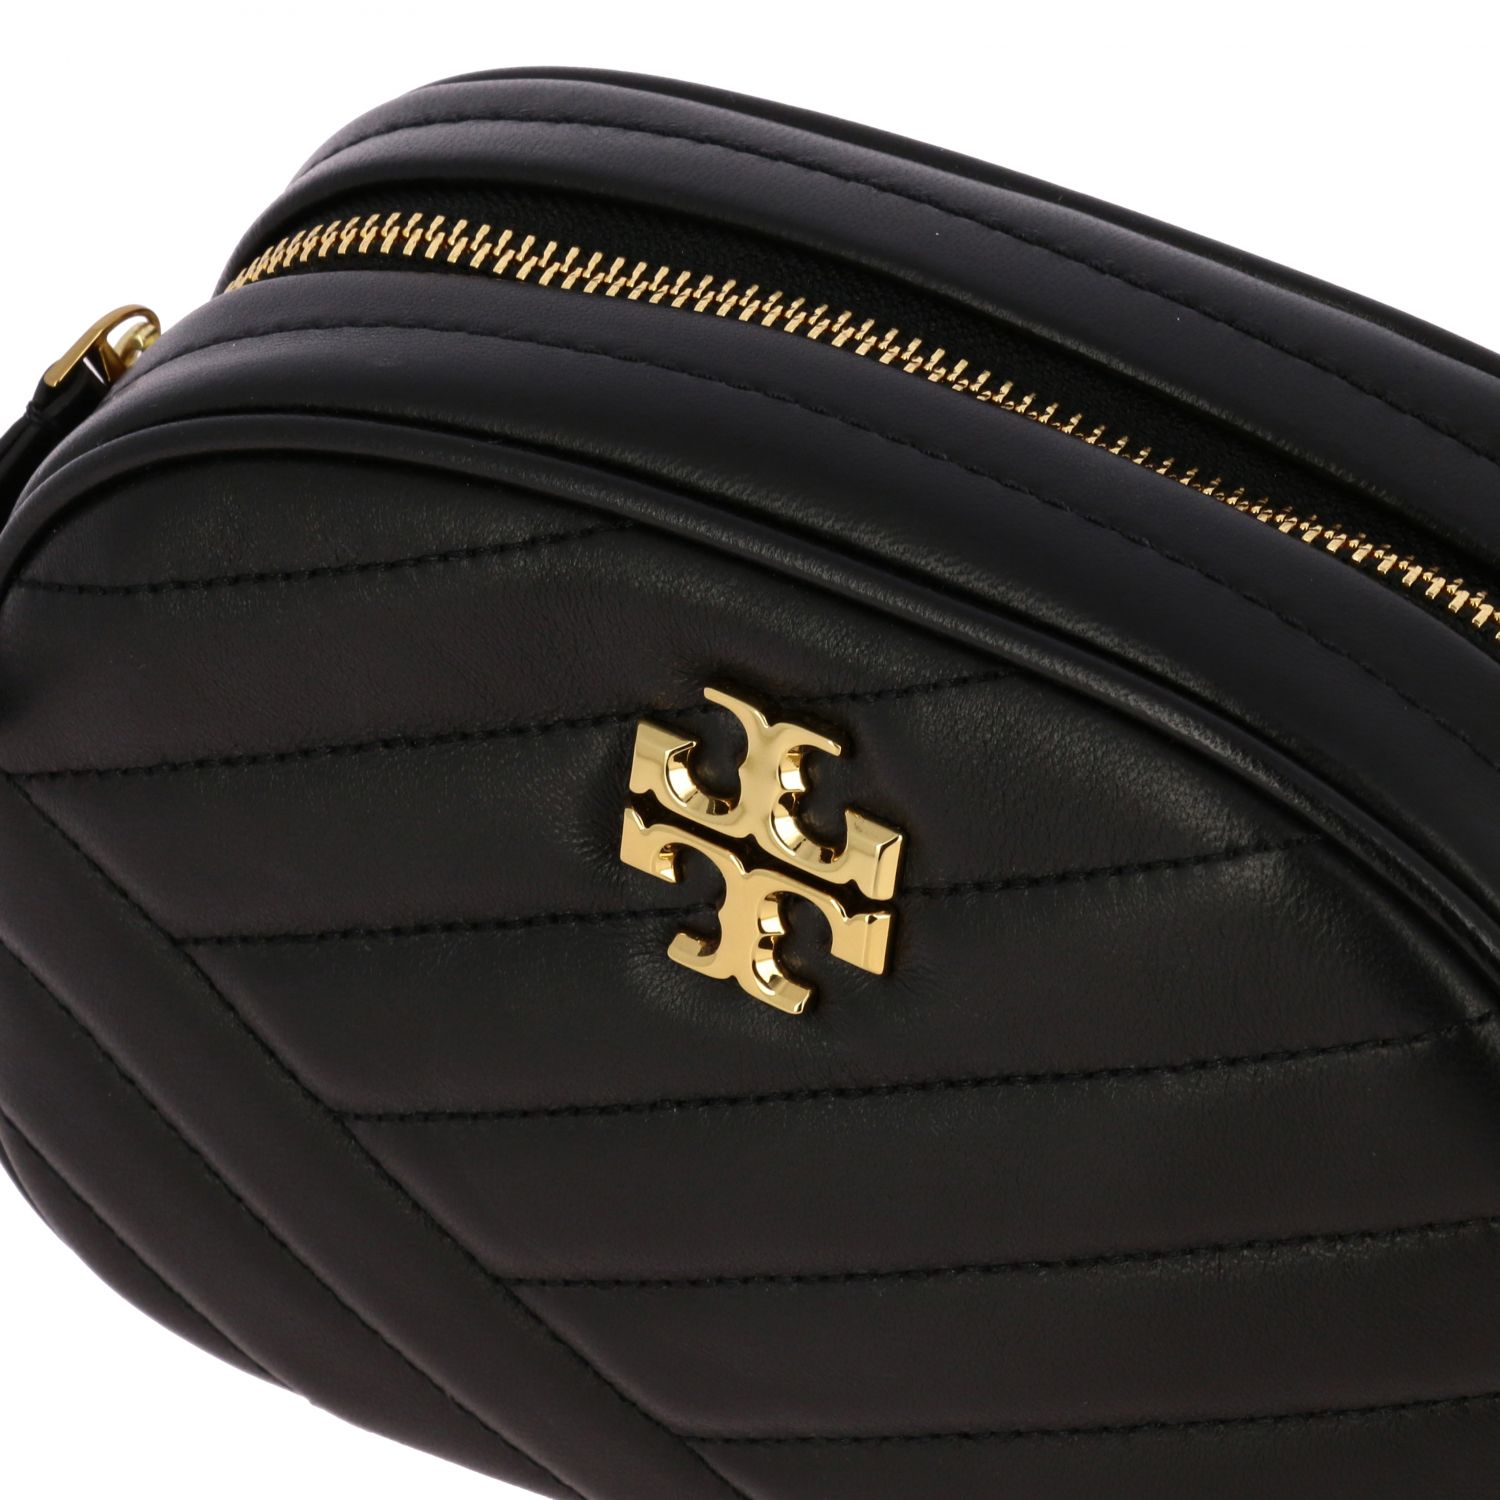 TORY BURCH: mini bag for women - Black | Tory Burch mini bag 60227 ...